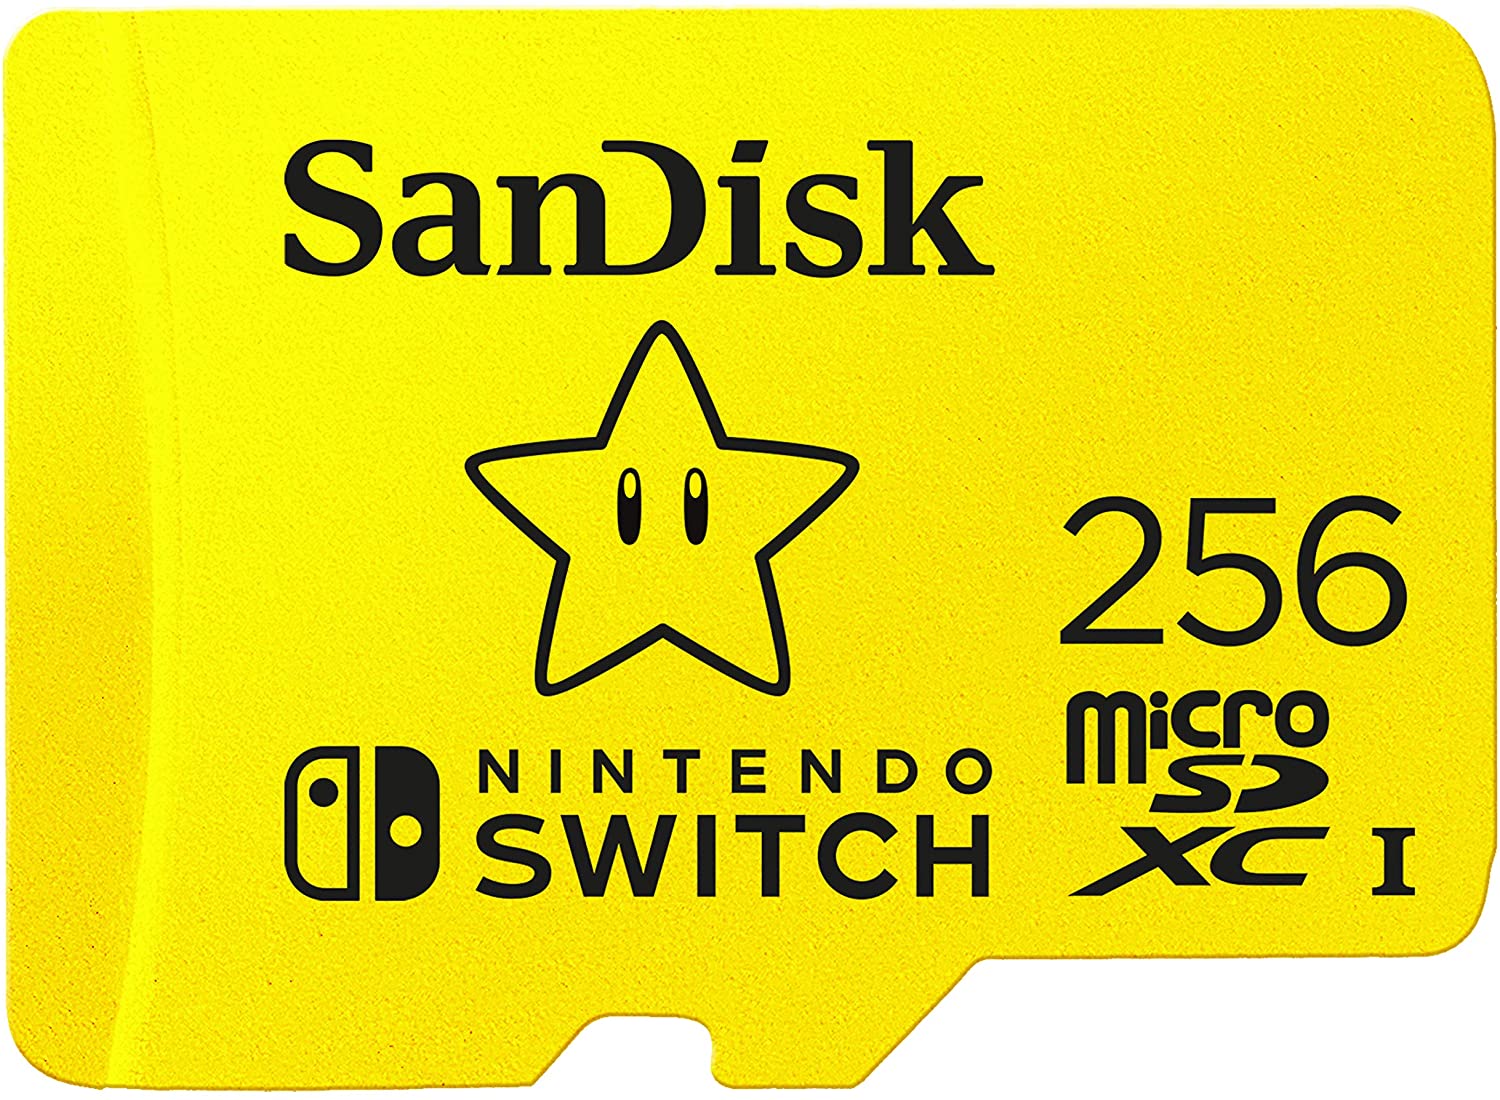 Sandisk Nintendo Switch Microsd 256gb